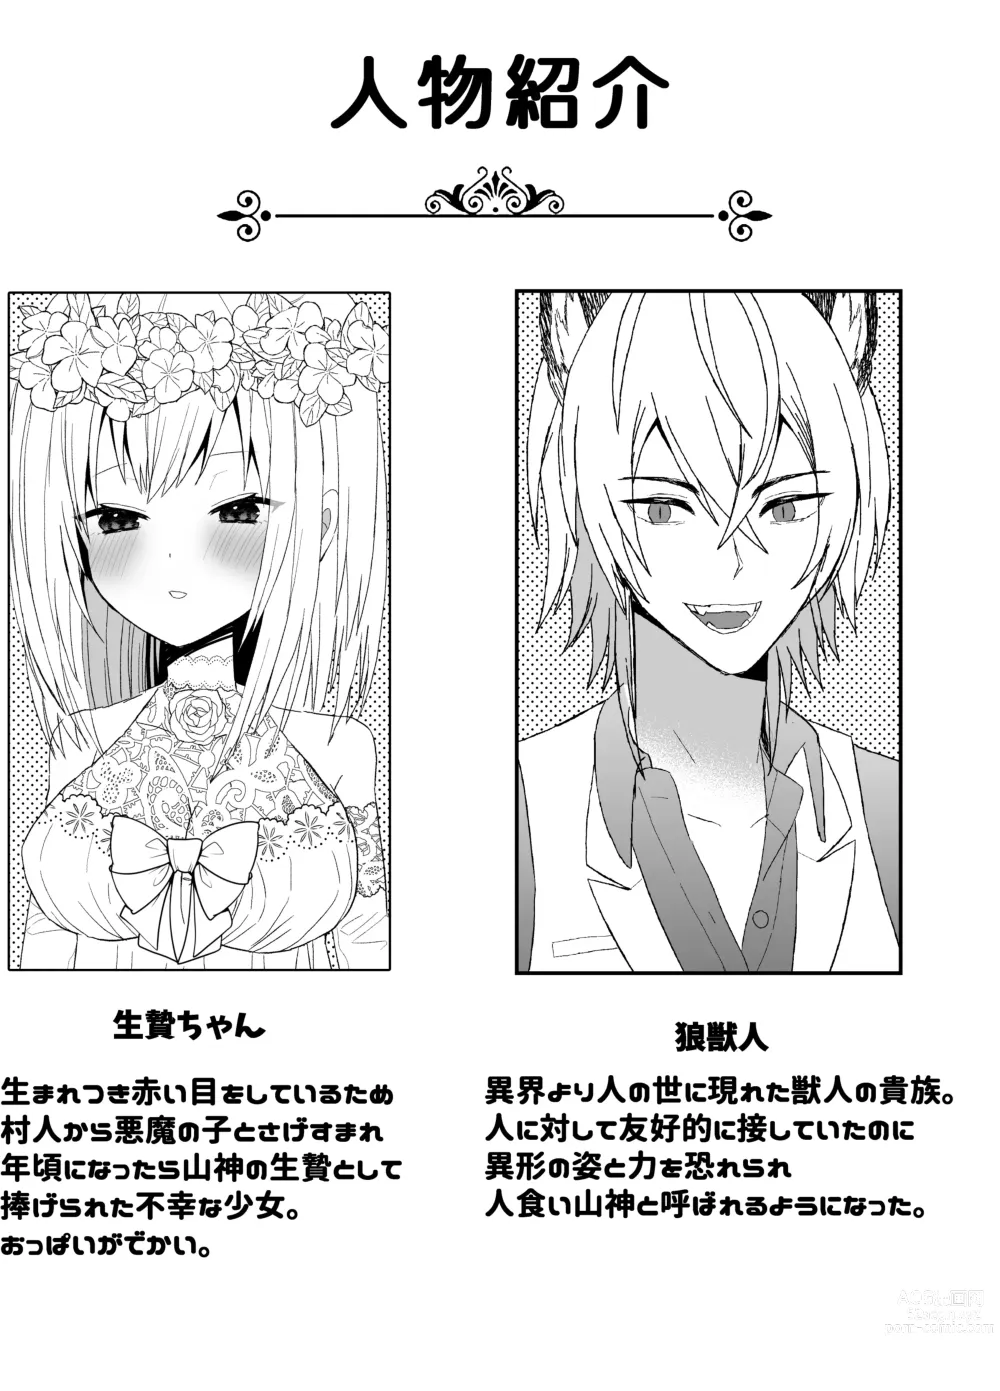 Page 2 of doujinshi 狼獣人の花嫁